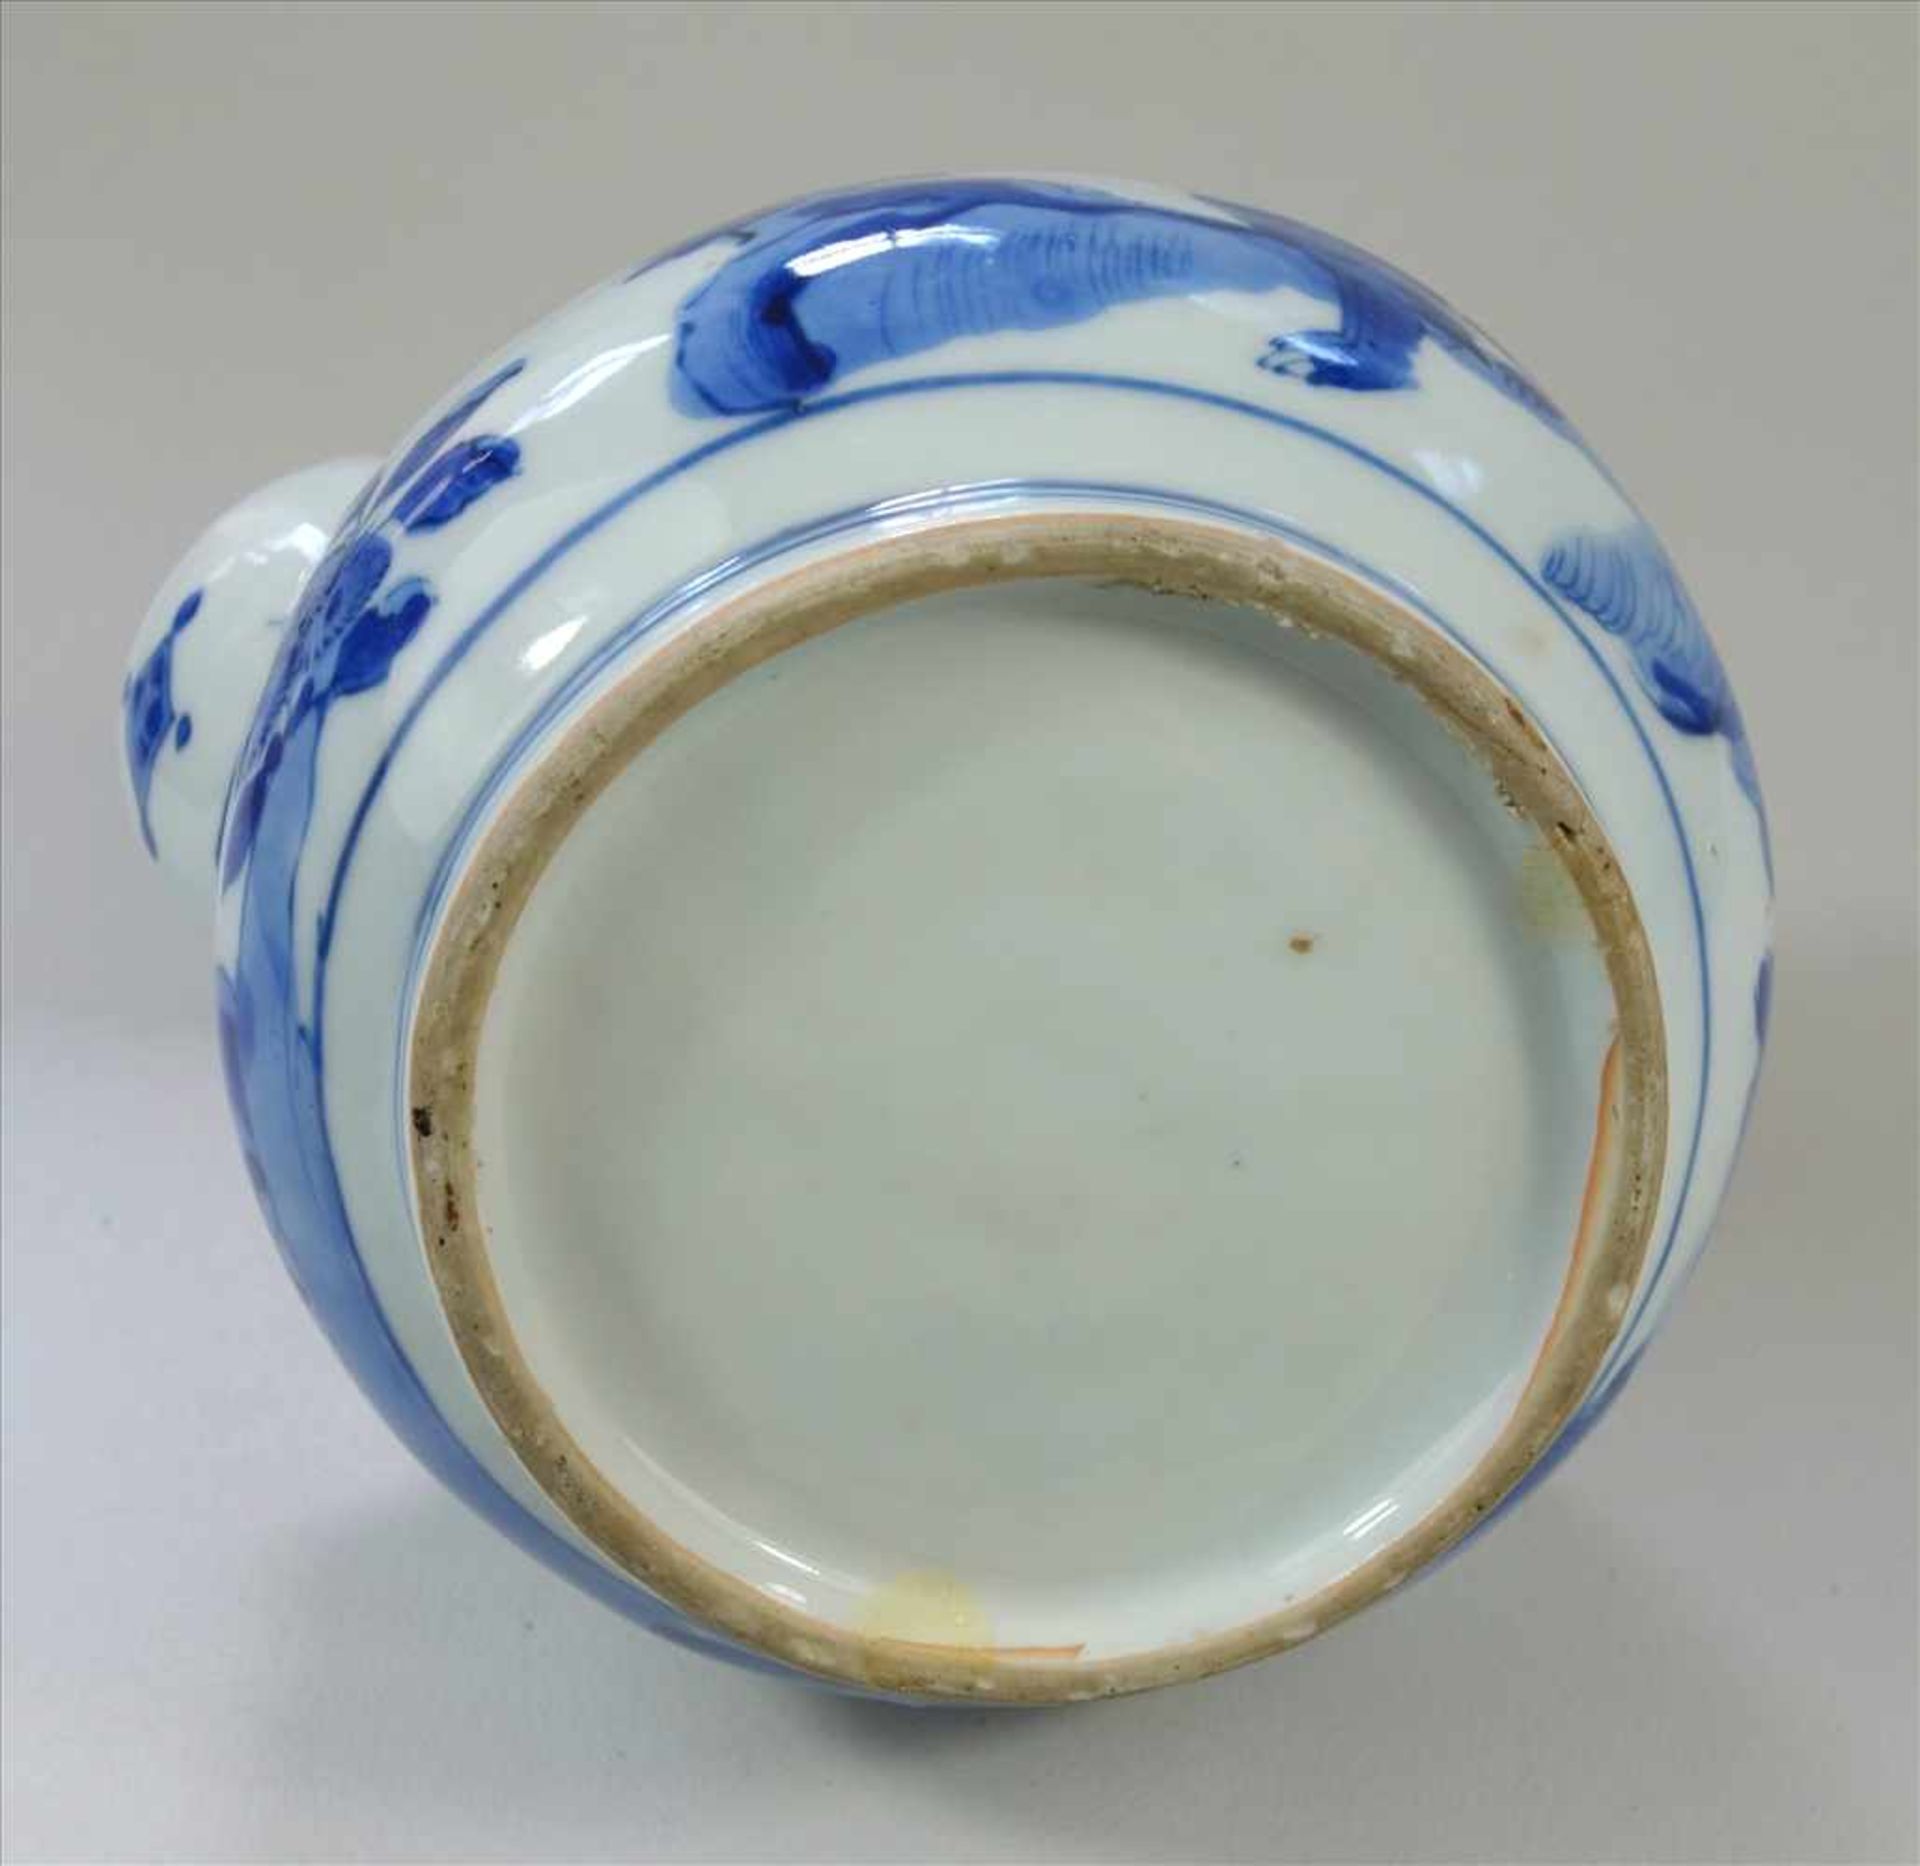 Kendi, wohl Ming, Wanli-Periode, China, 16./17.Jh., weißes Porzellan mit blauer Bemalung, vergoldete - Bild 7 aus 7